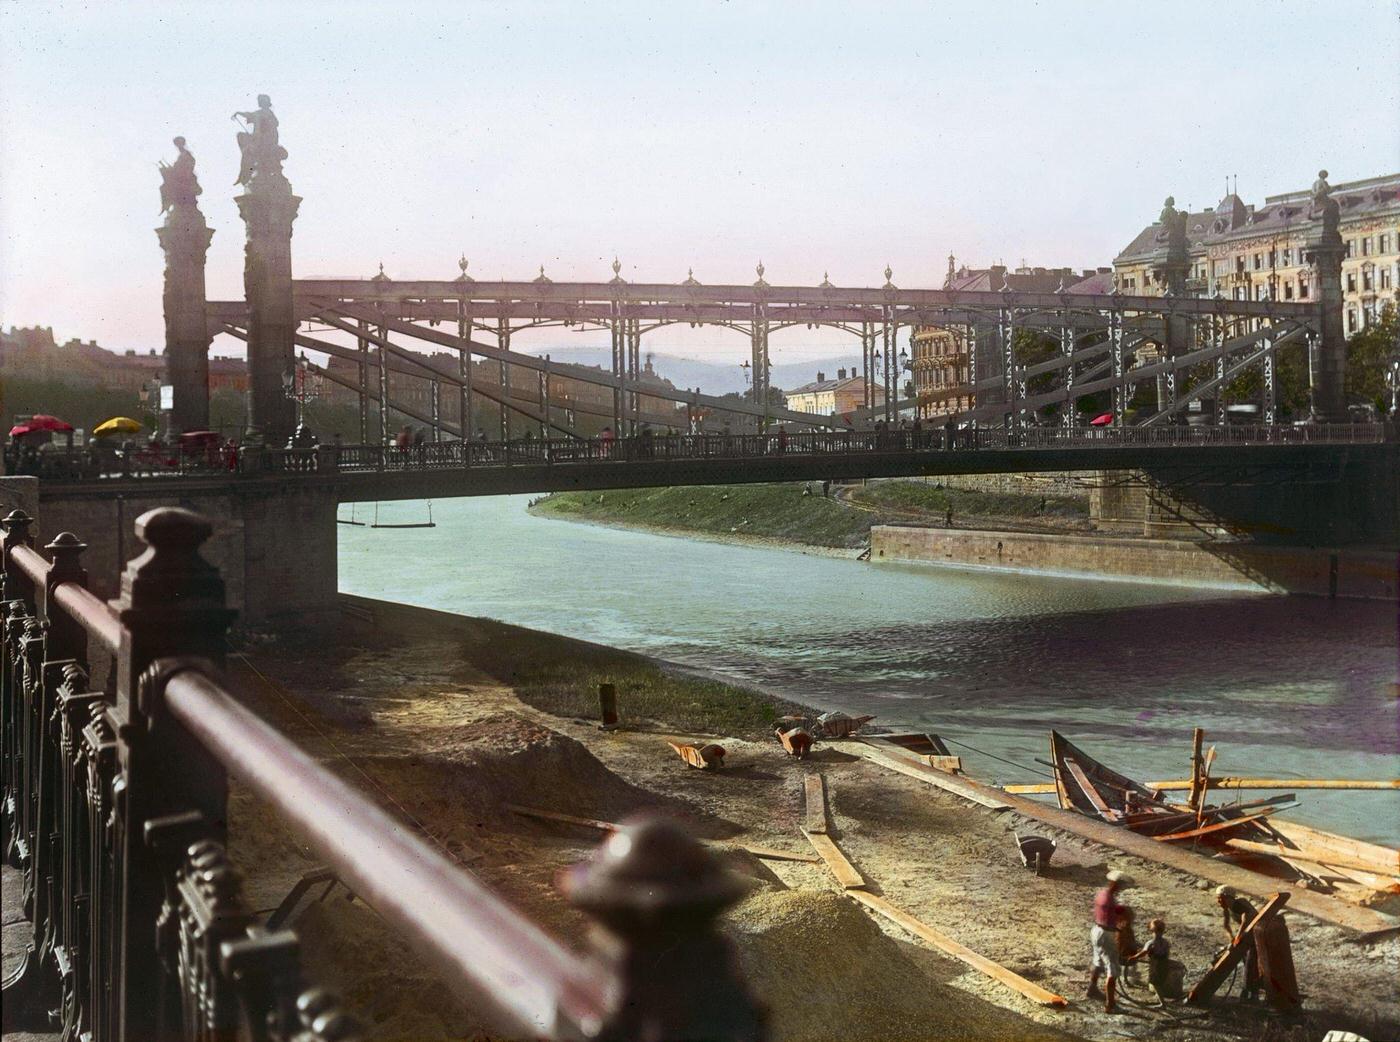 The Augartenbruecke bridge, built in 1872 and destroyed in 1945. Inner City, Vienna, 1905.